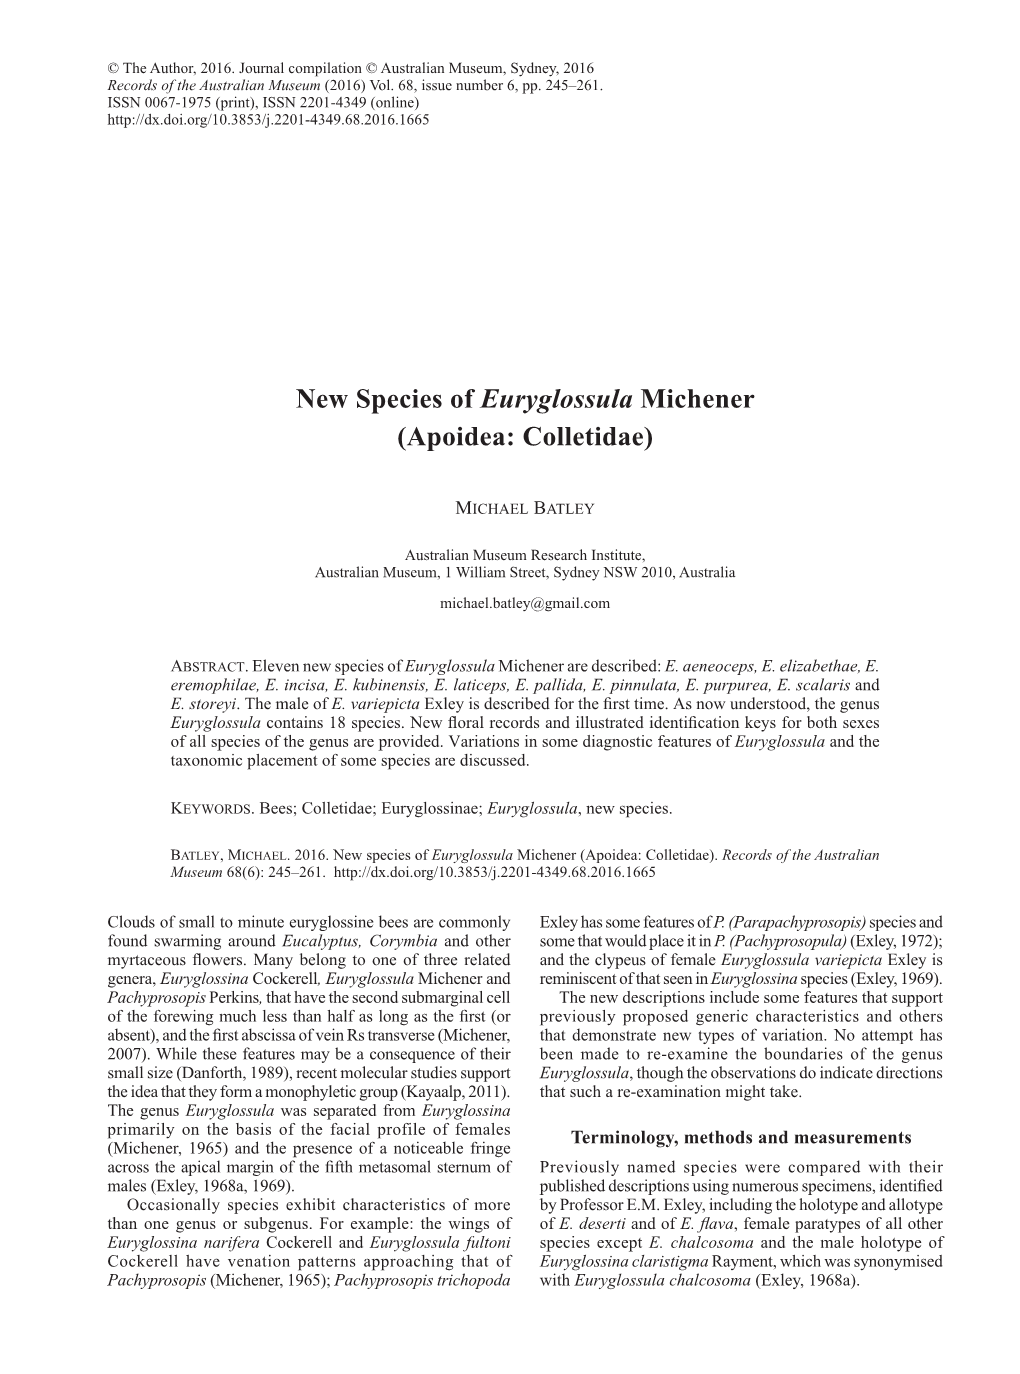 New Species of Euryglossula Michener (Apoidea: Colletidae)